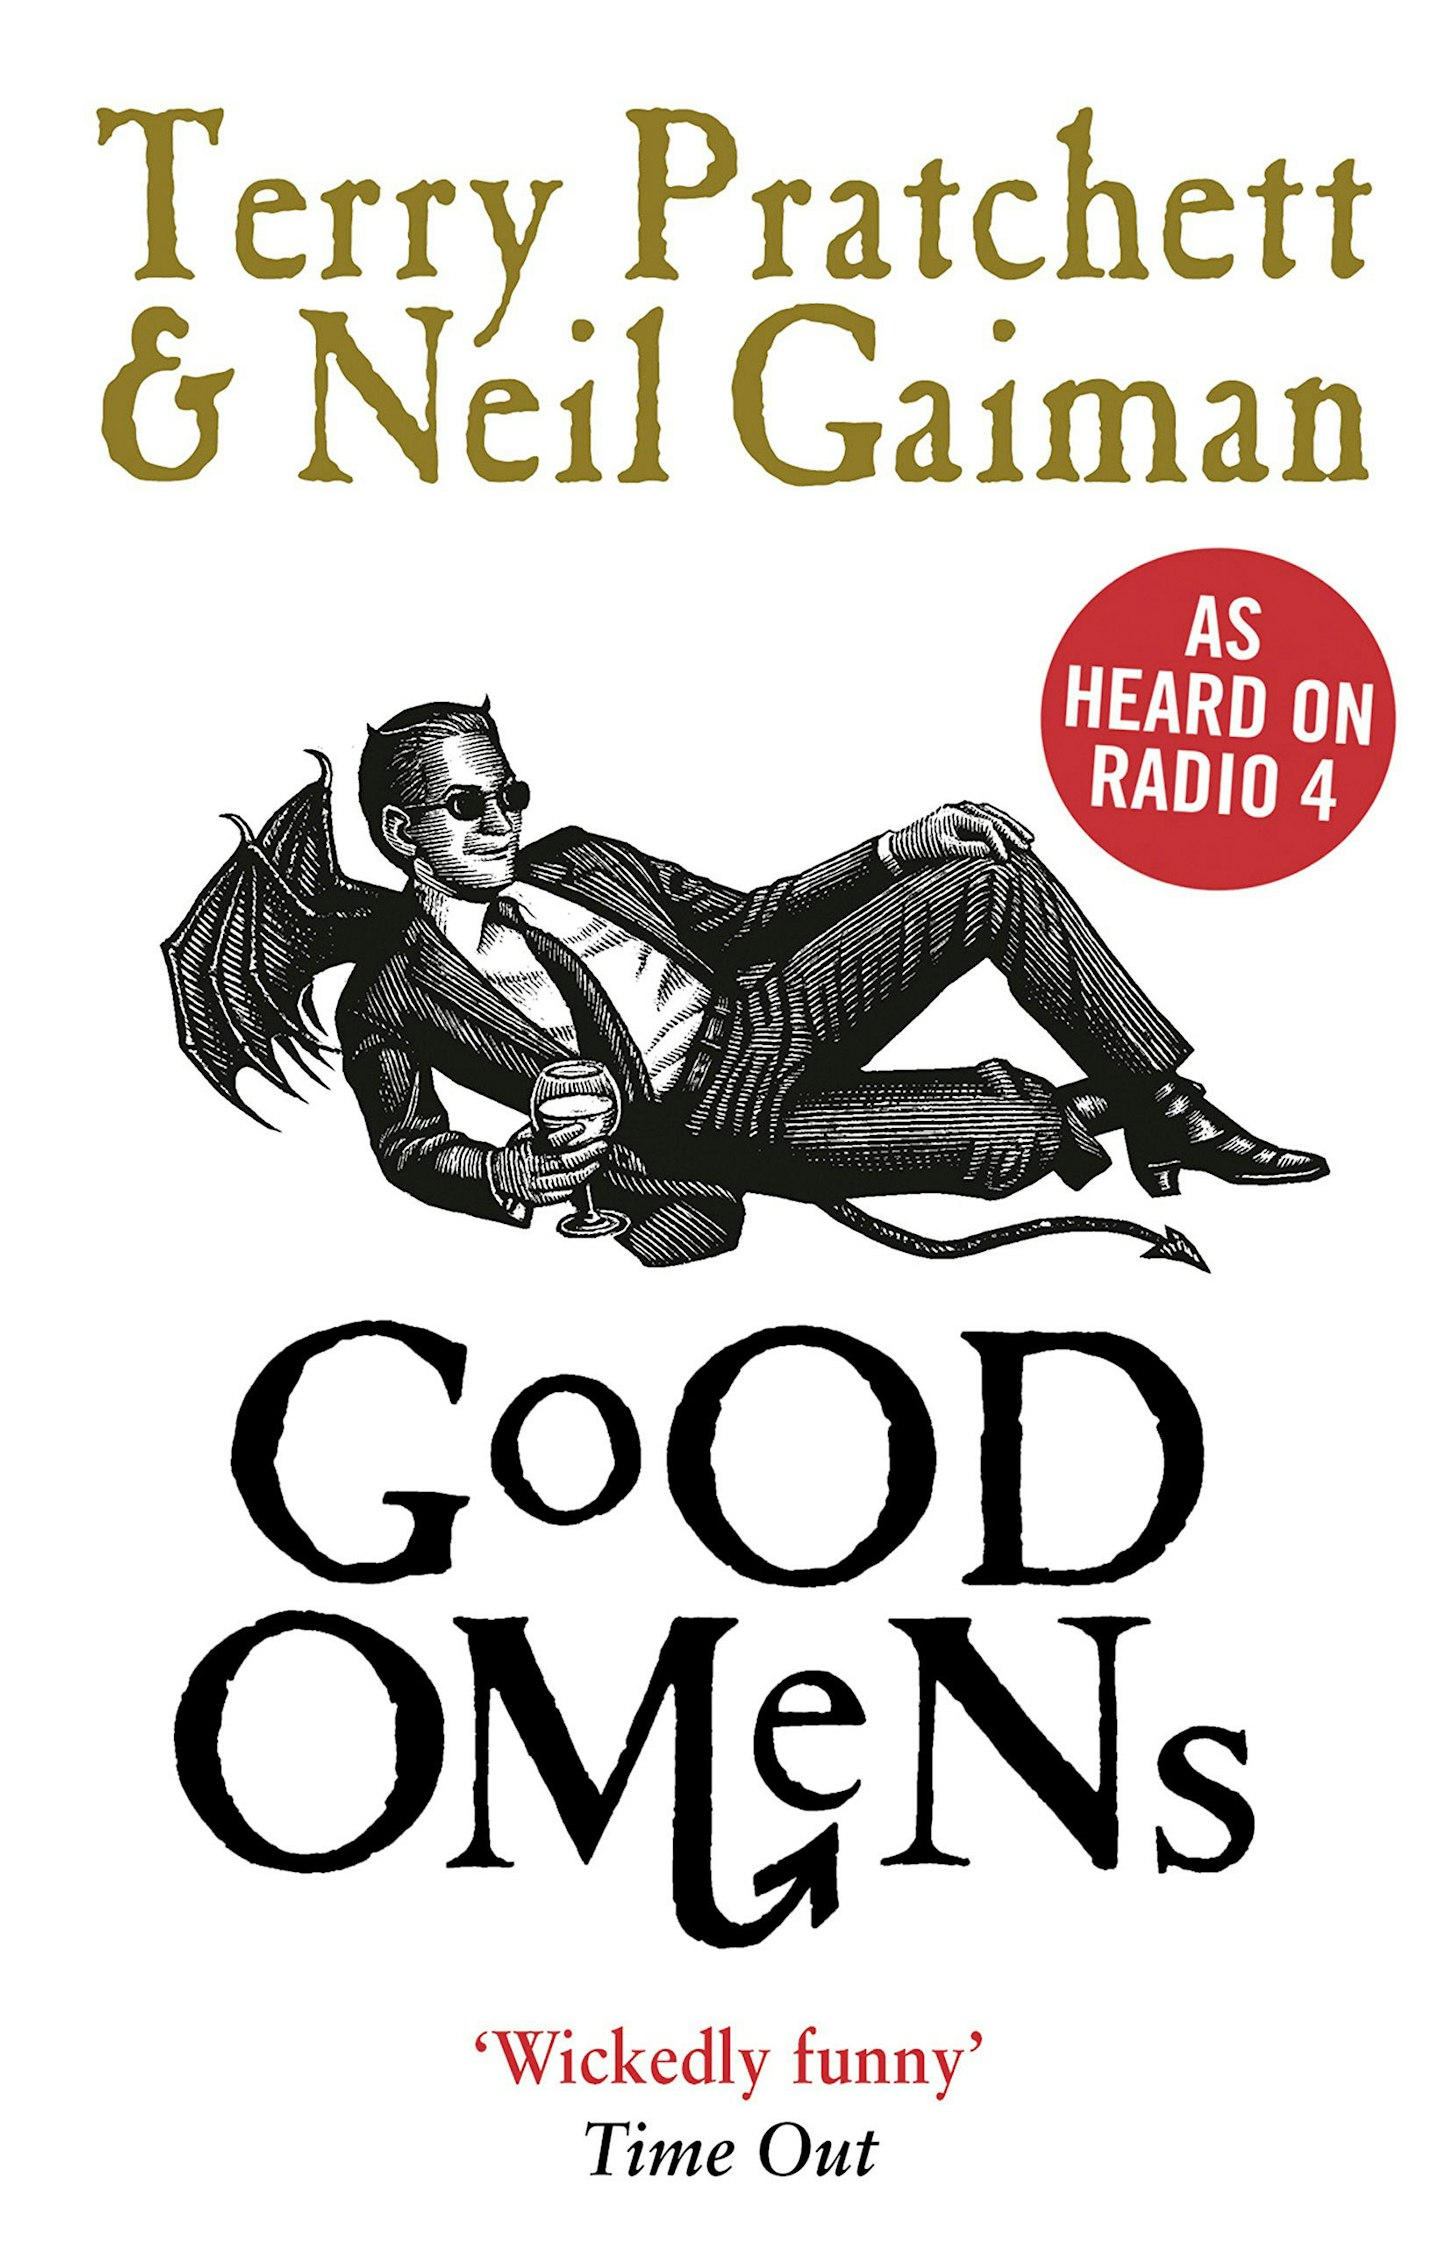 Good Omens - Terry Pratchett & Neil Gaiman (Corgi)